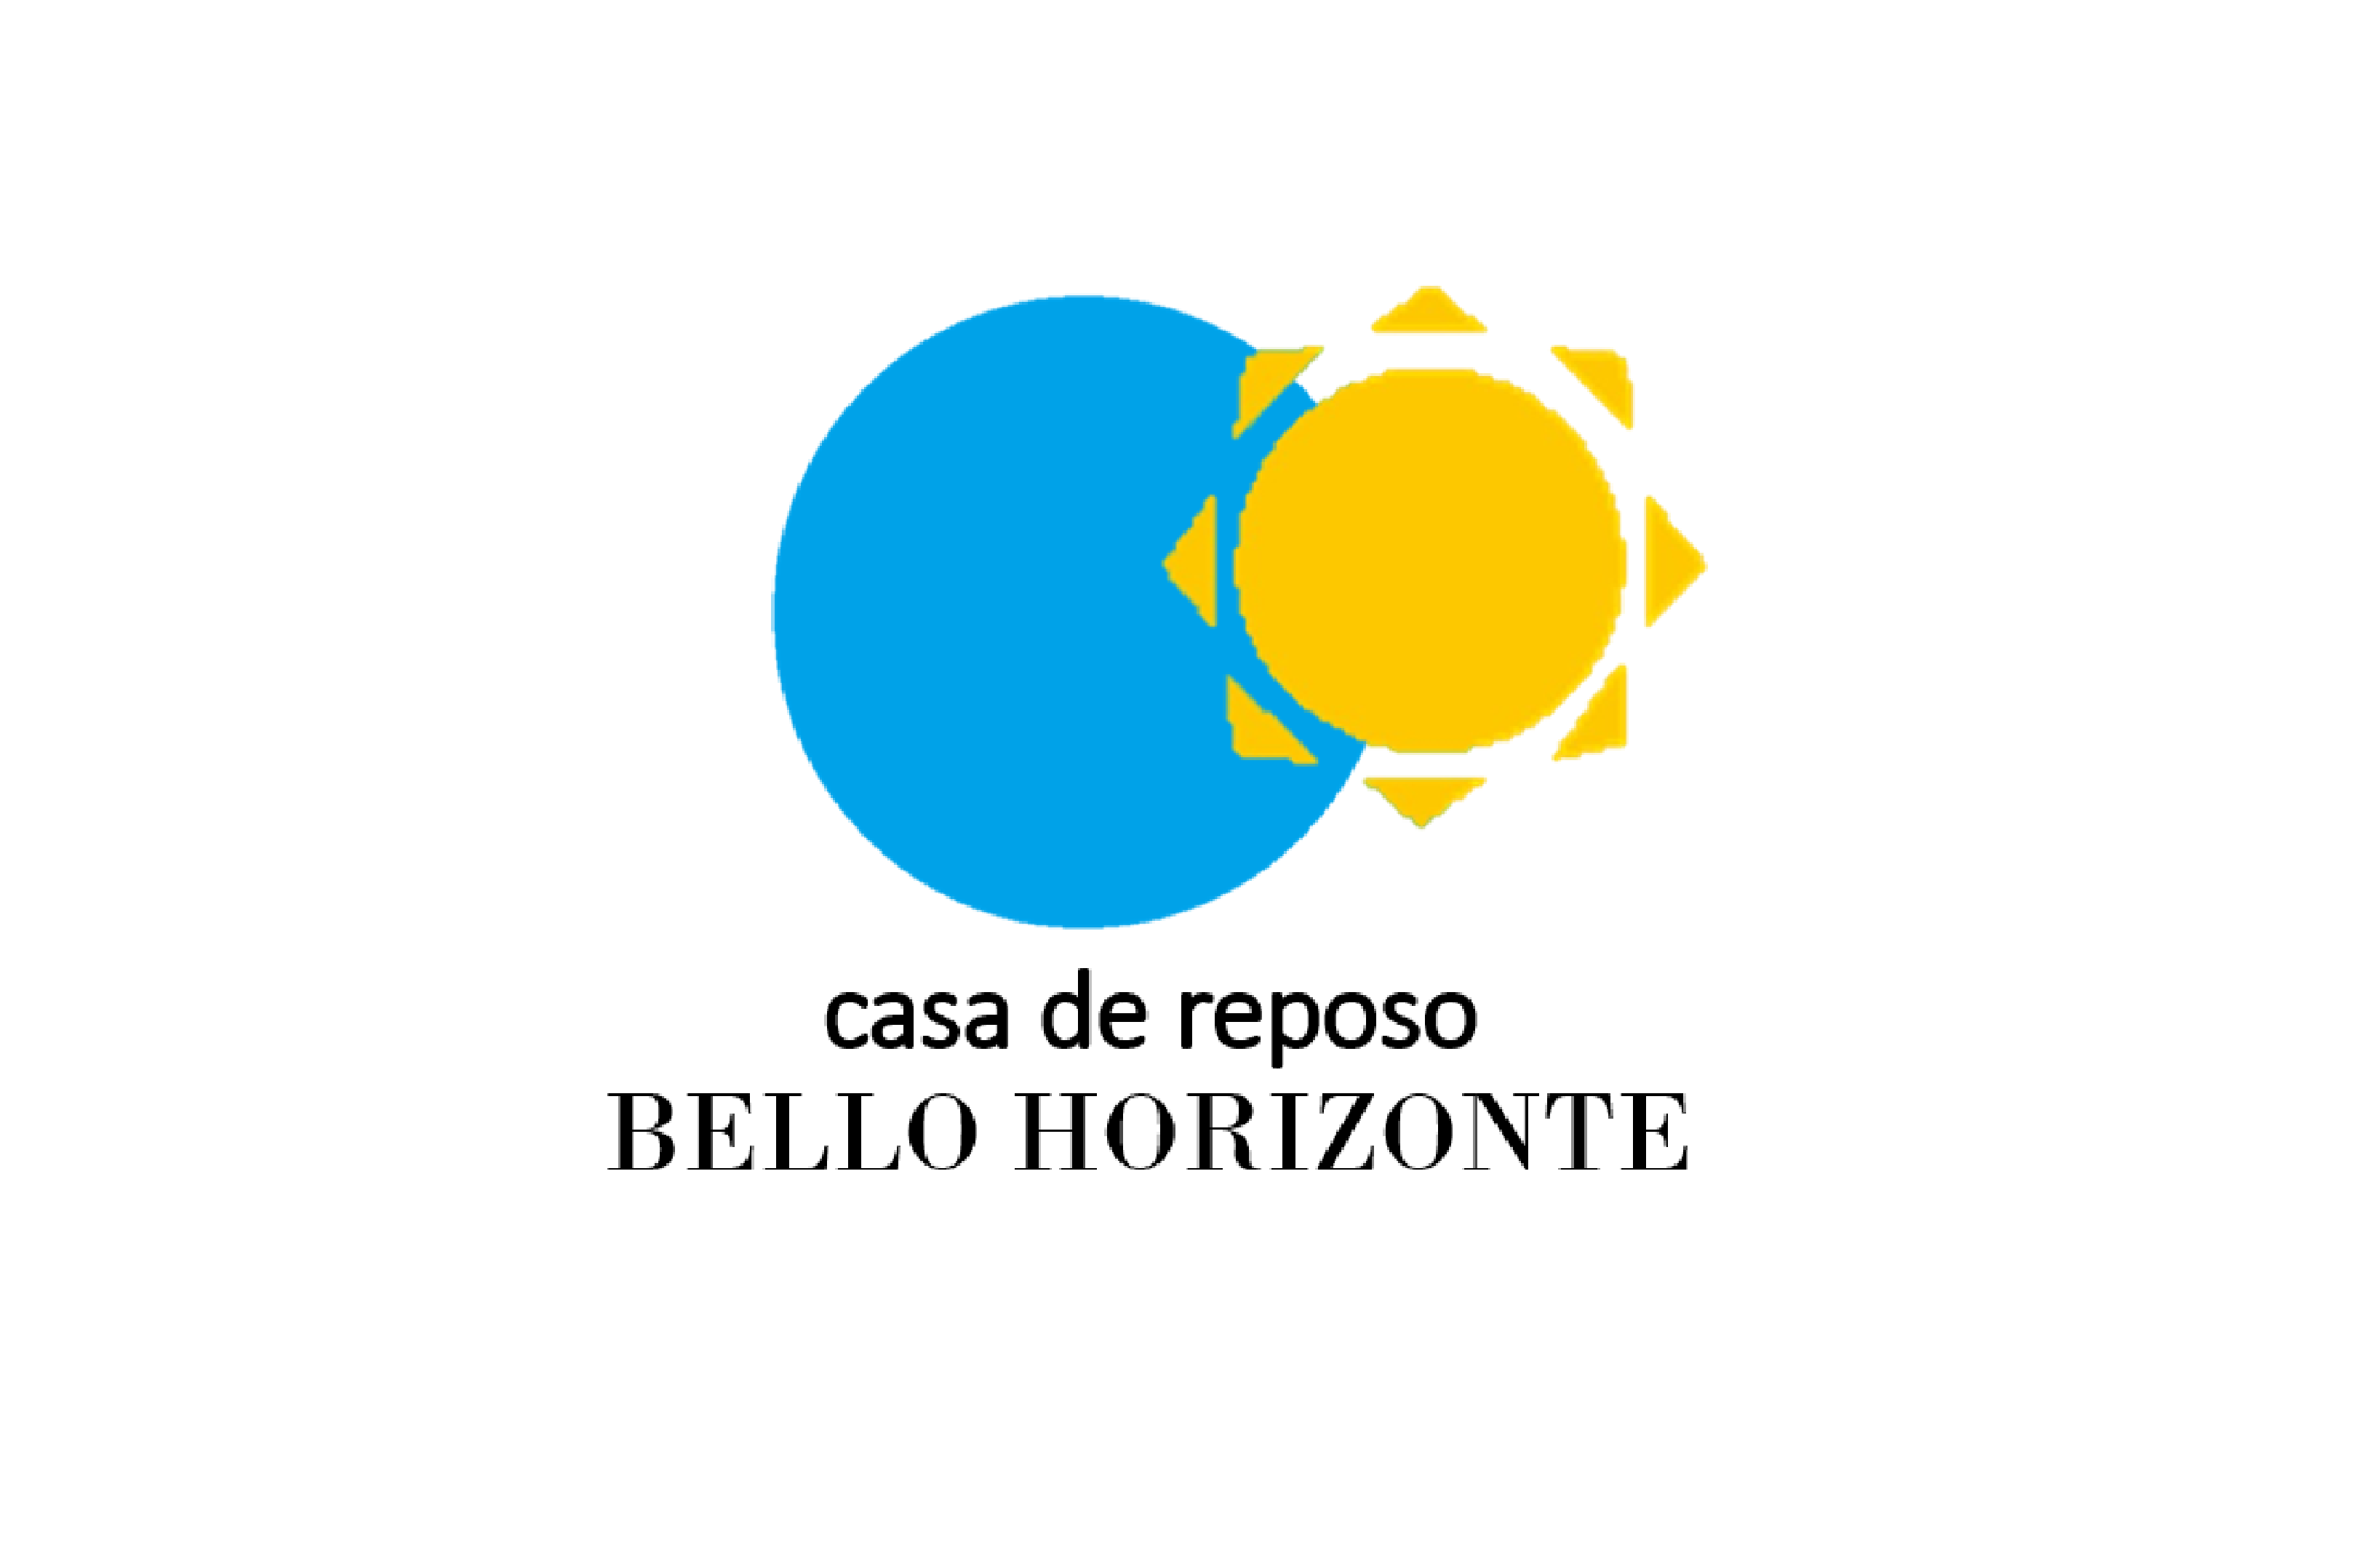 www.bellohorizonte.org